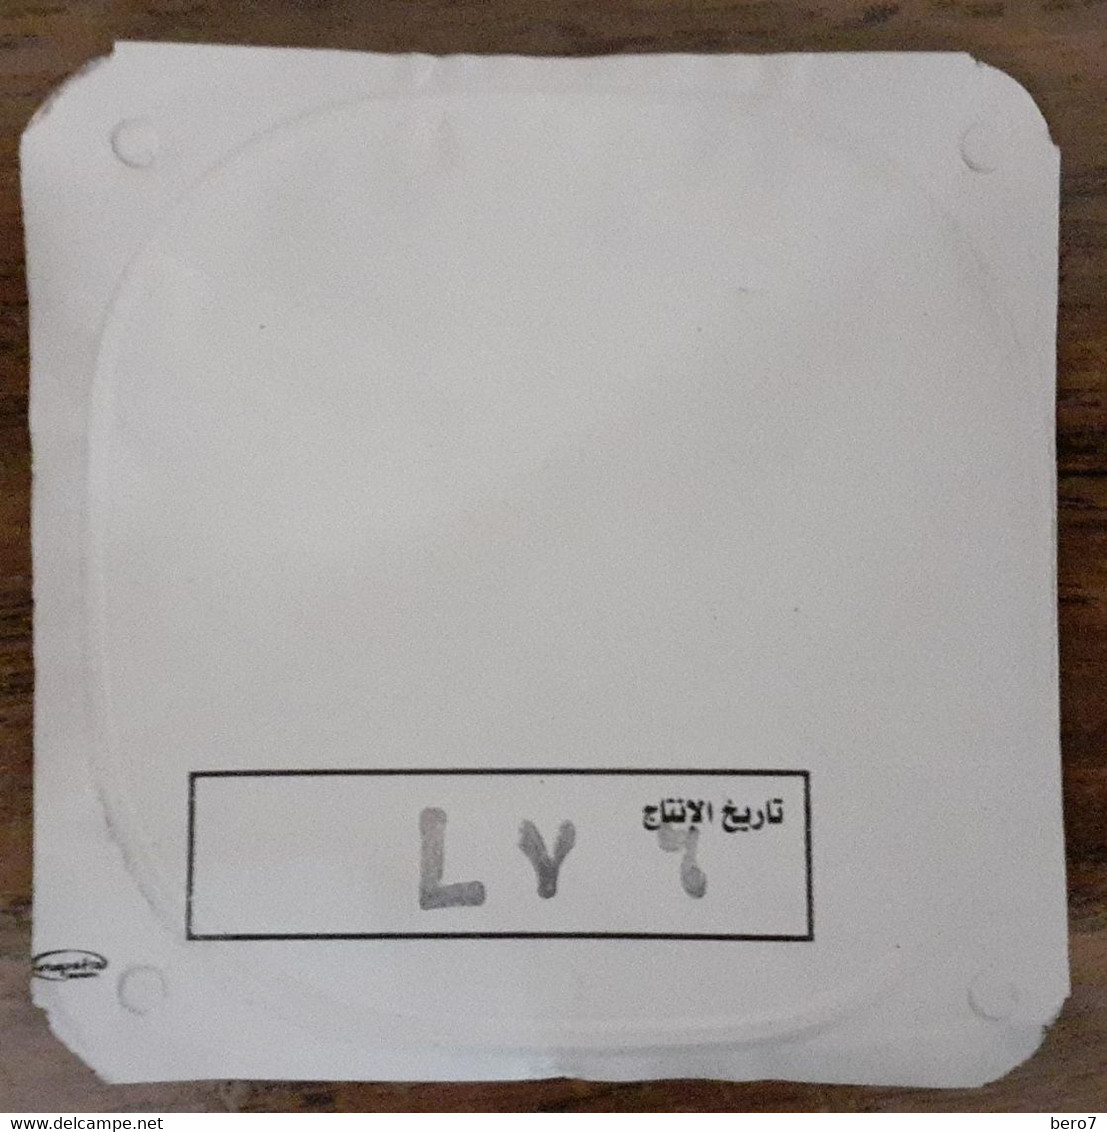 Egypt - Couvercle De Yoghurt Letter "L" (foil) (Egypte) (Egitto) (Ägypten) (Egipto) (Egypten) - Milchdeckel - Kaffeerahmdeckel